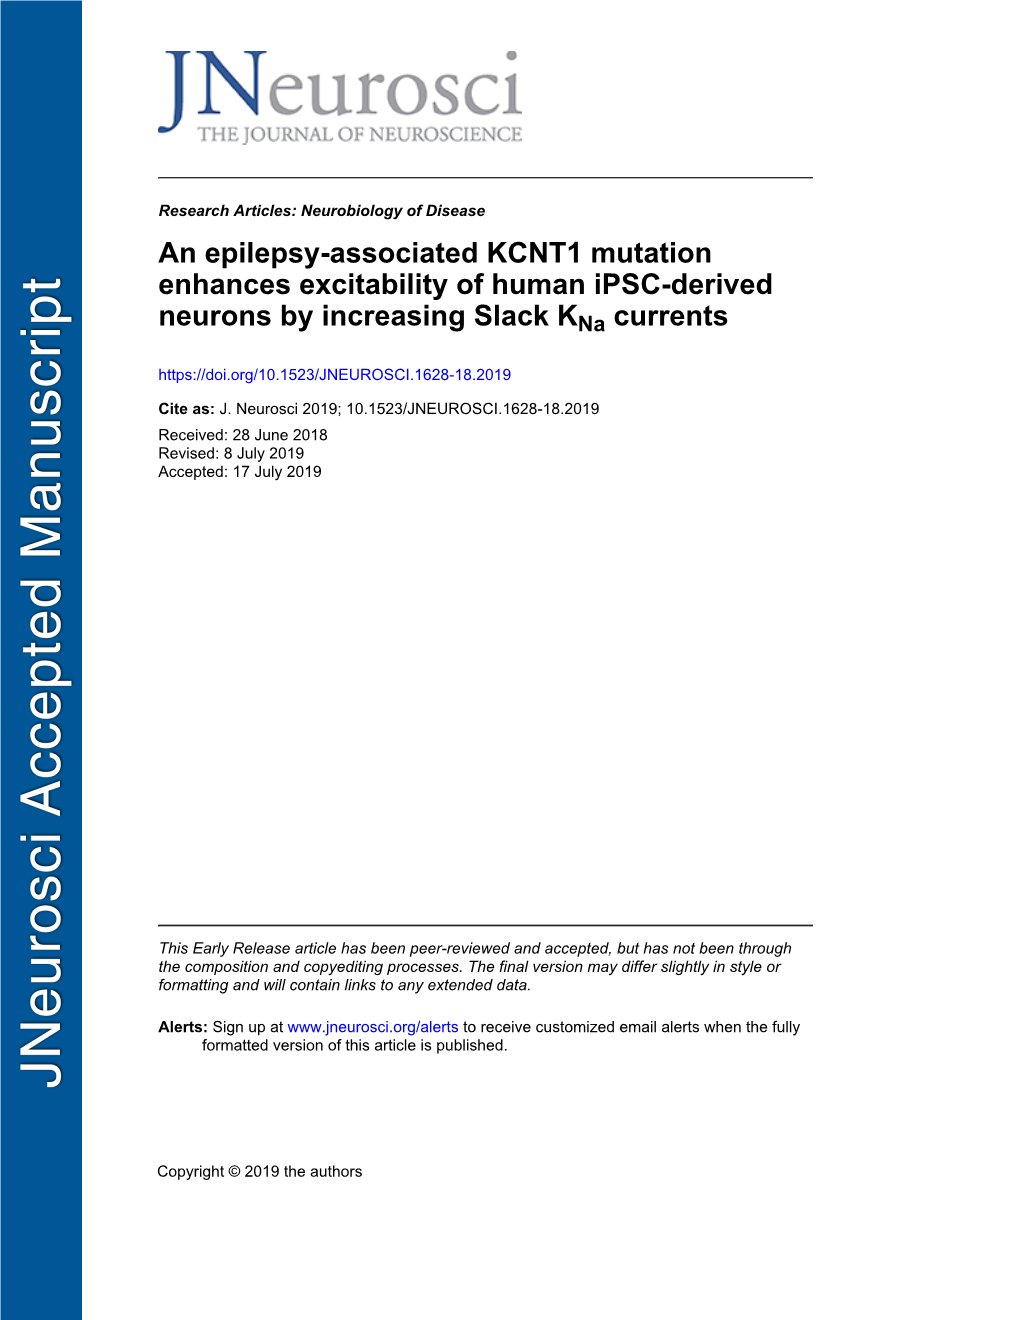 An Epilepsy-Associated KCNT1 Mutation Enhances Excitability Of